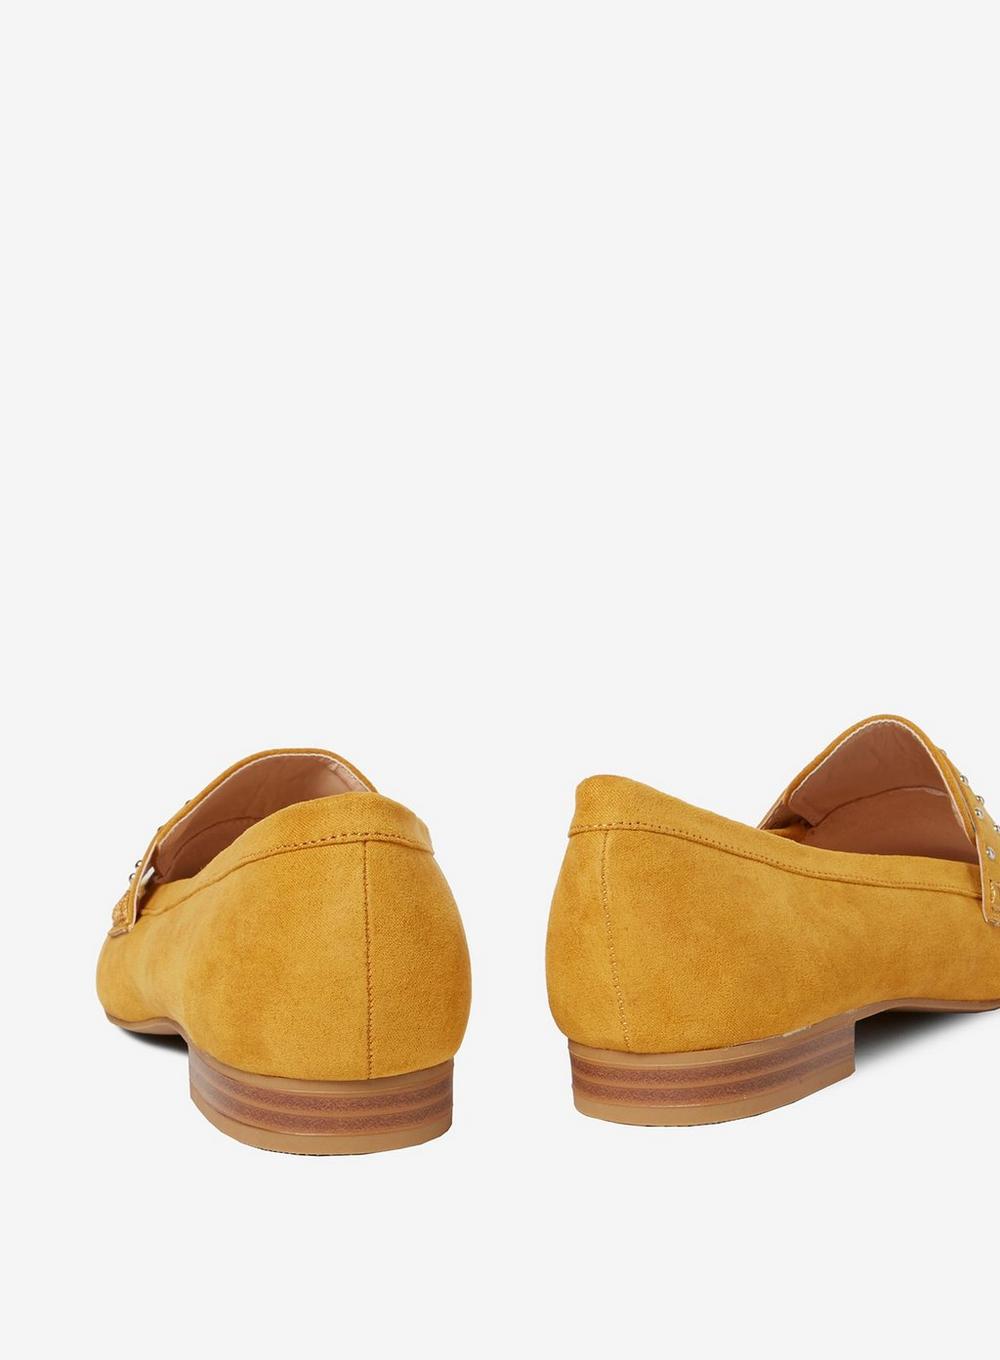 dorothy perkins mustard shoes